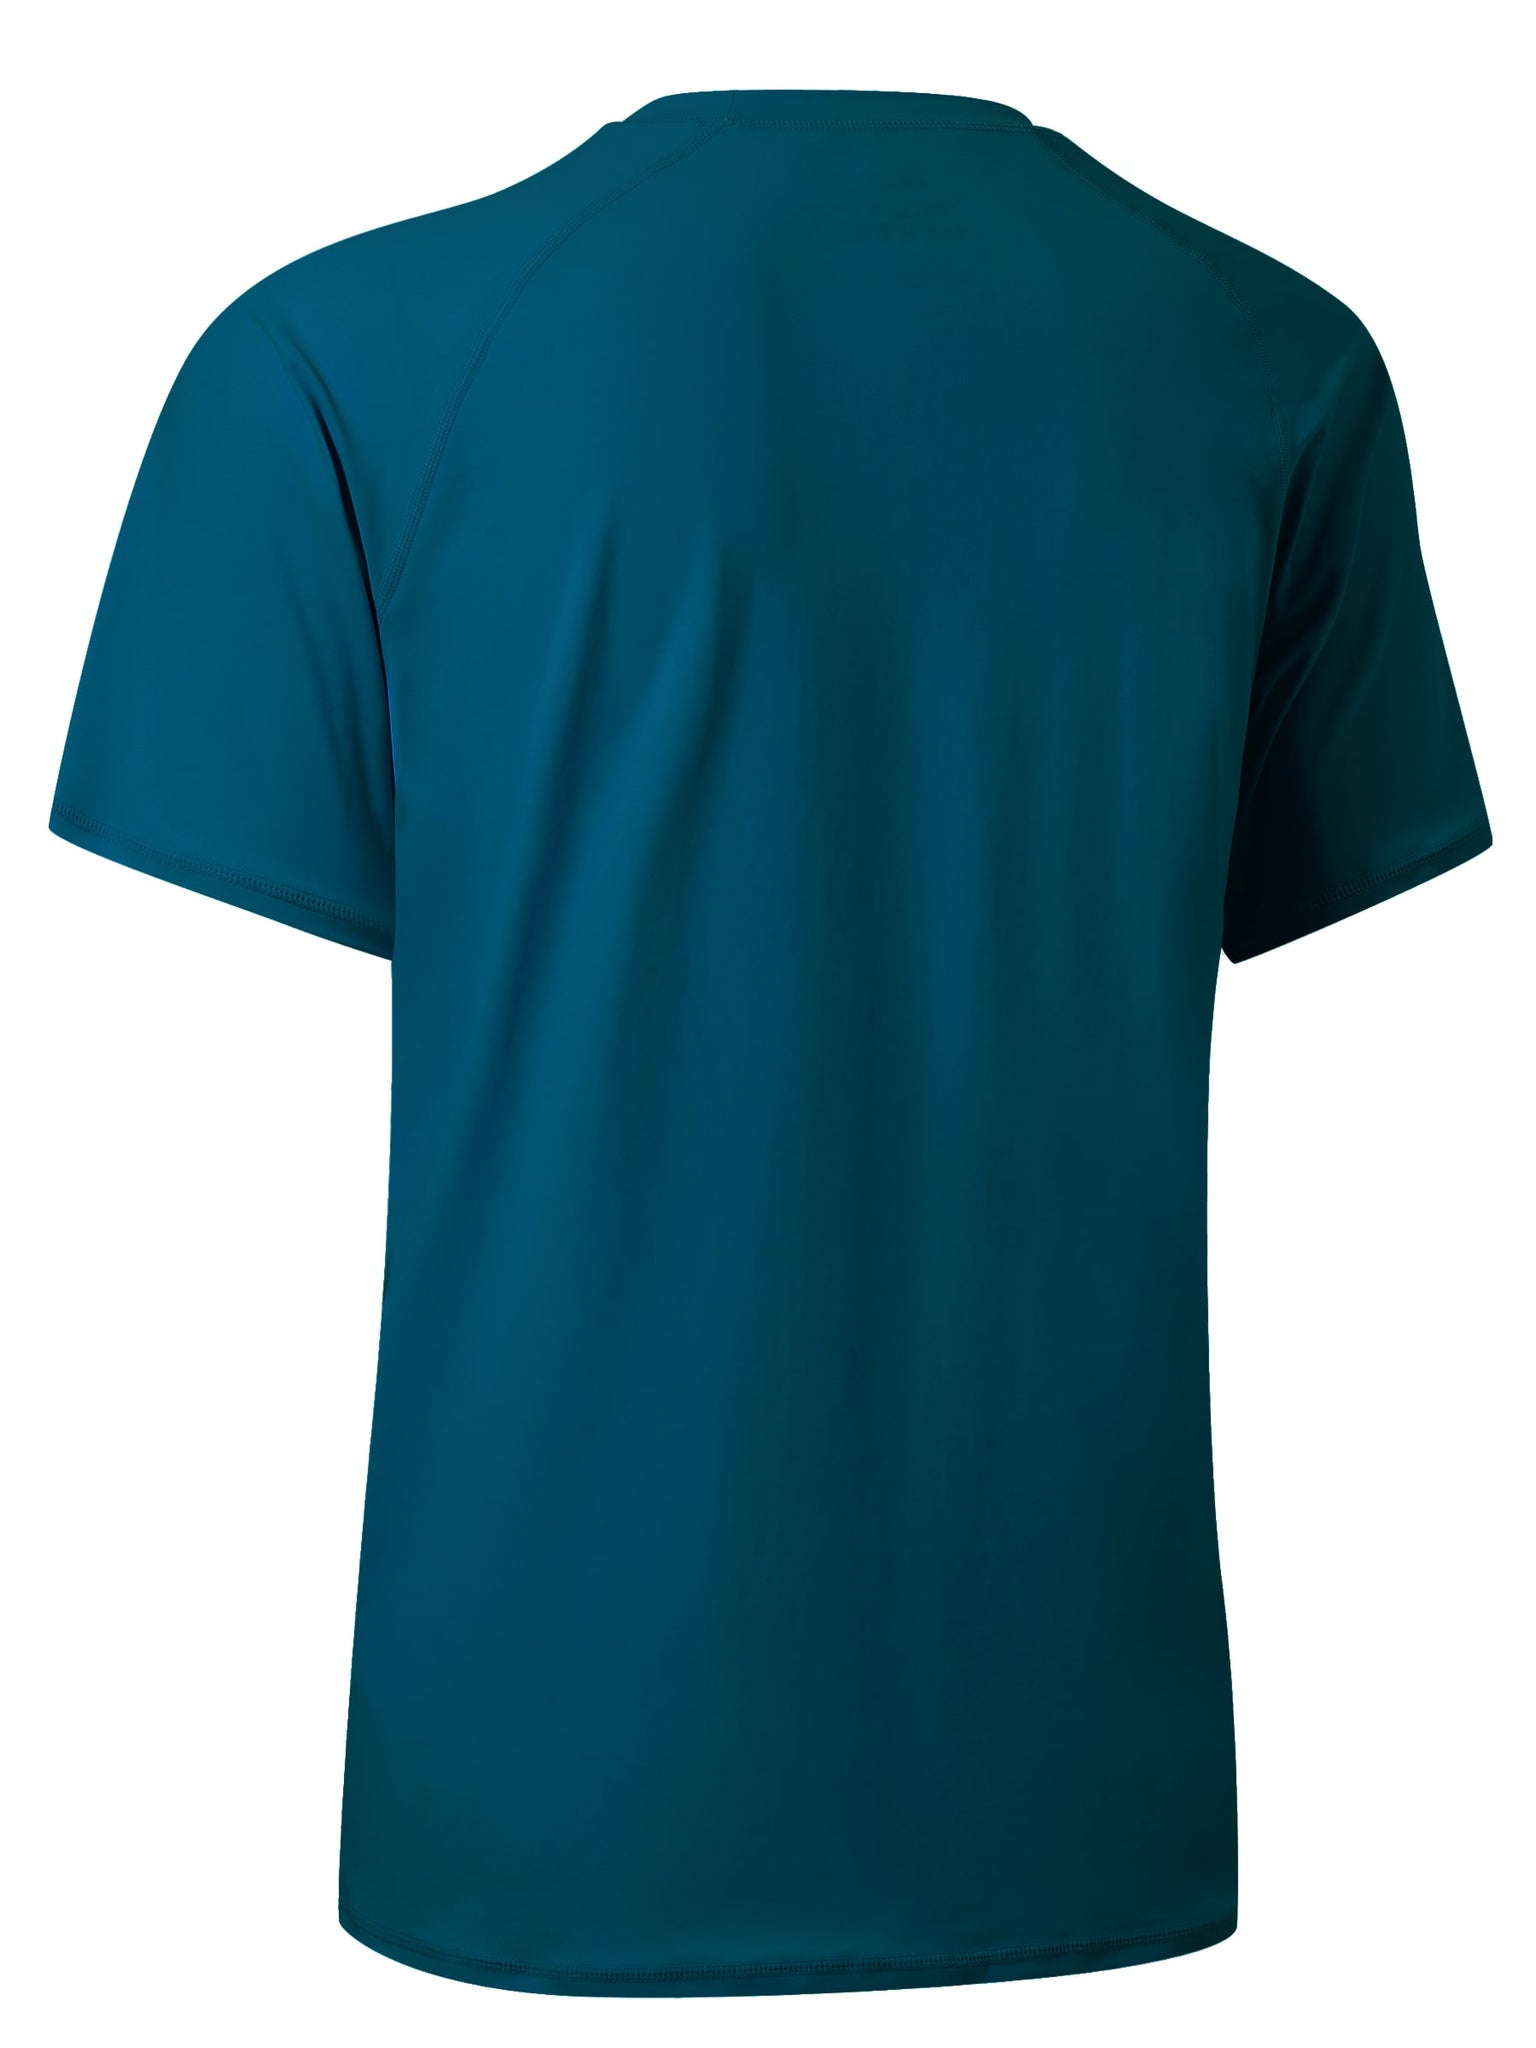 Men's Sun Protection Short Sleeve Shirt_Navy_detail2